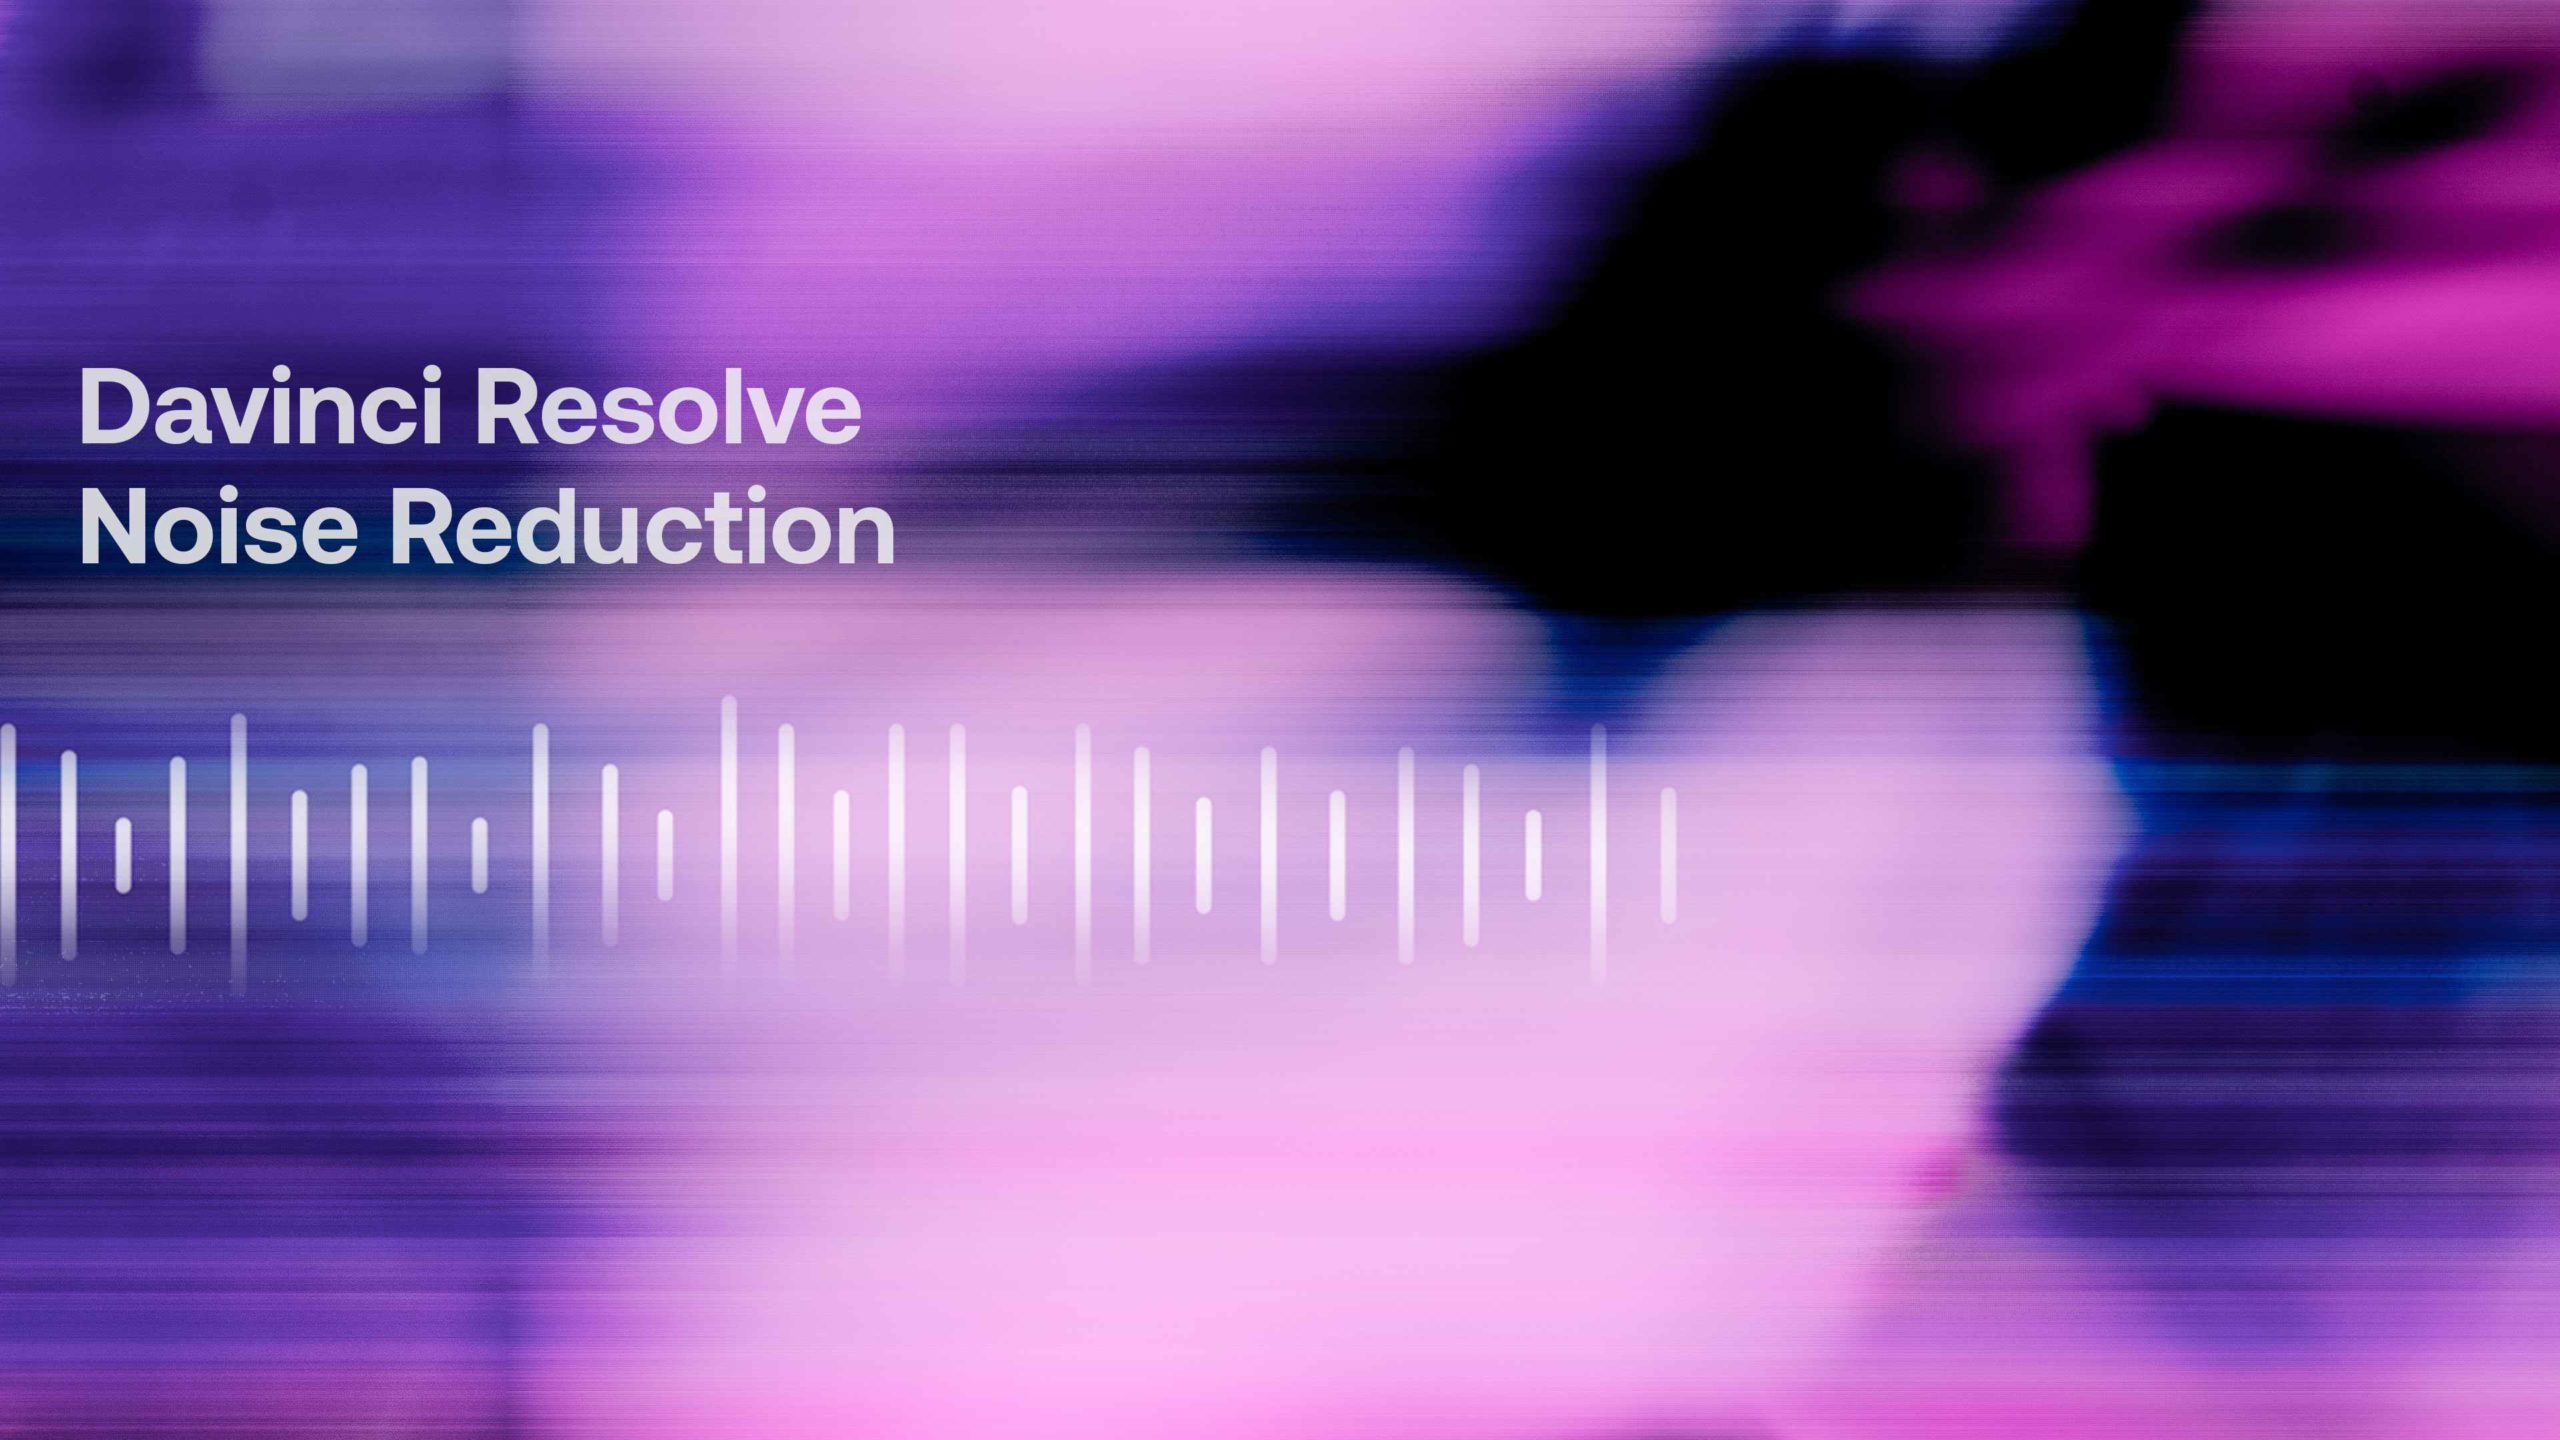 effective-video-audio-noise-reduction-in-davinci-resolve-17-motion